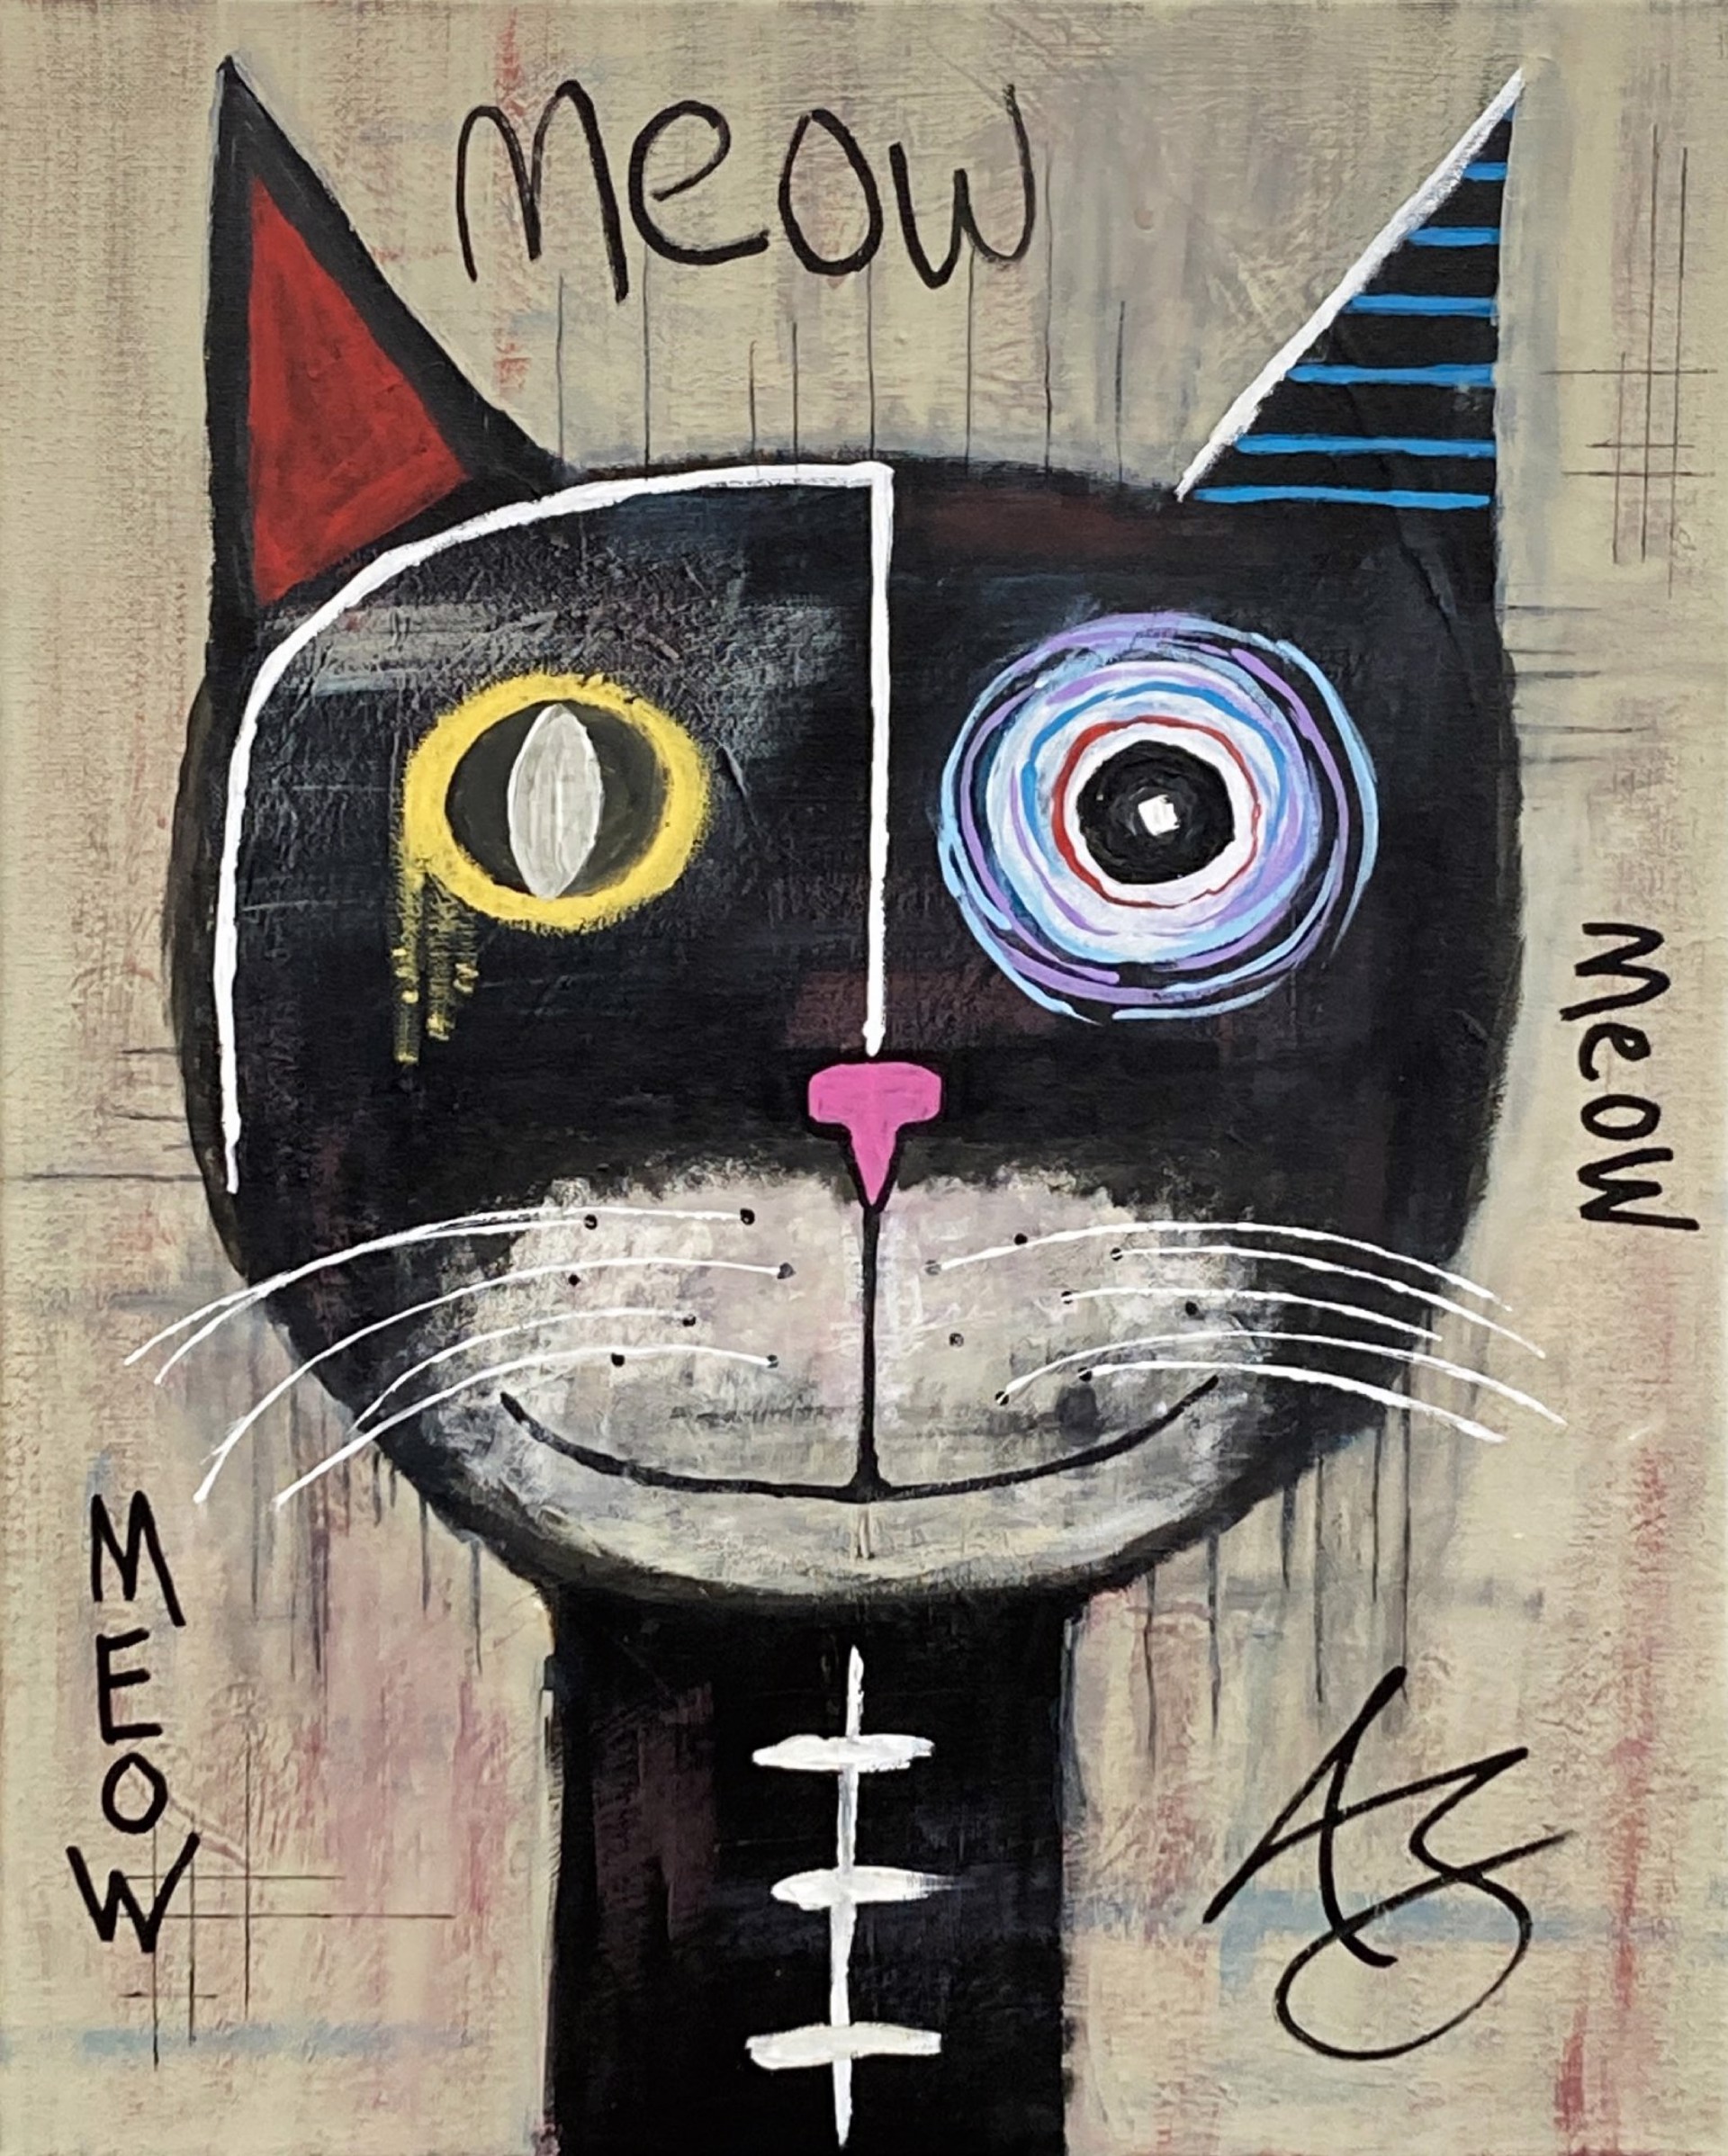 Meow by Jeremy Bruno